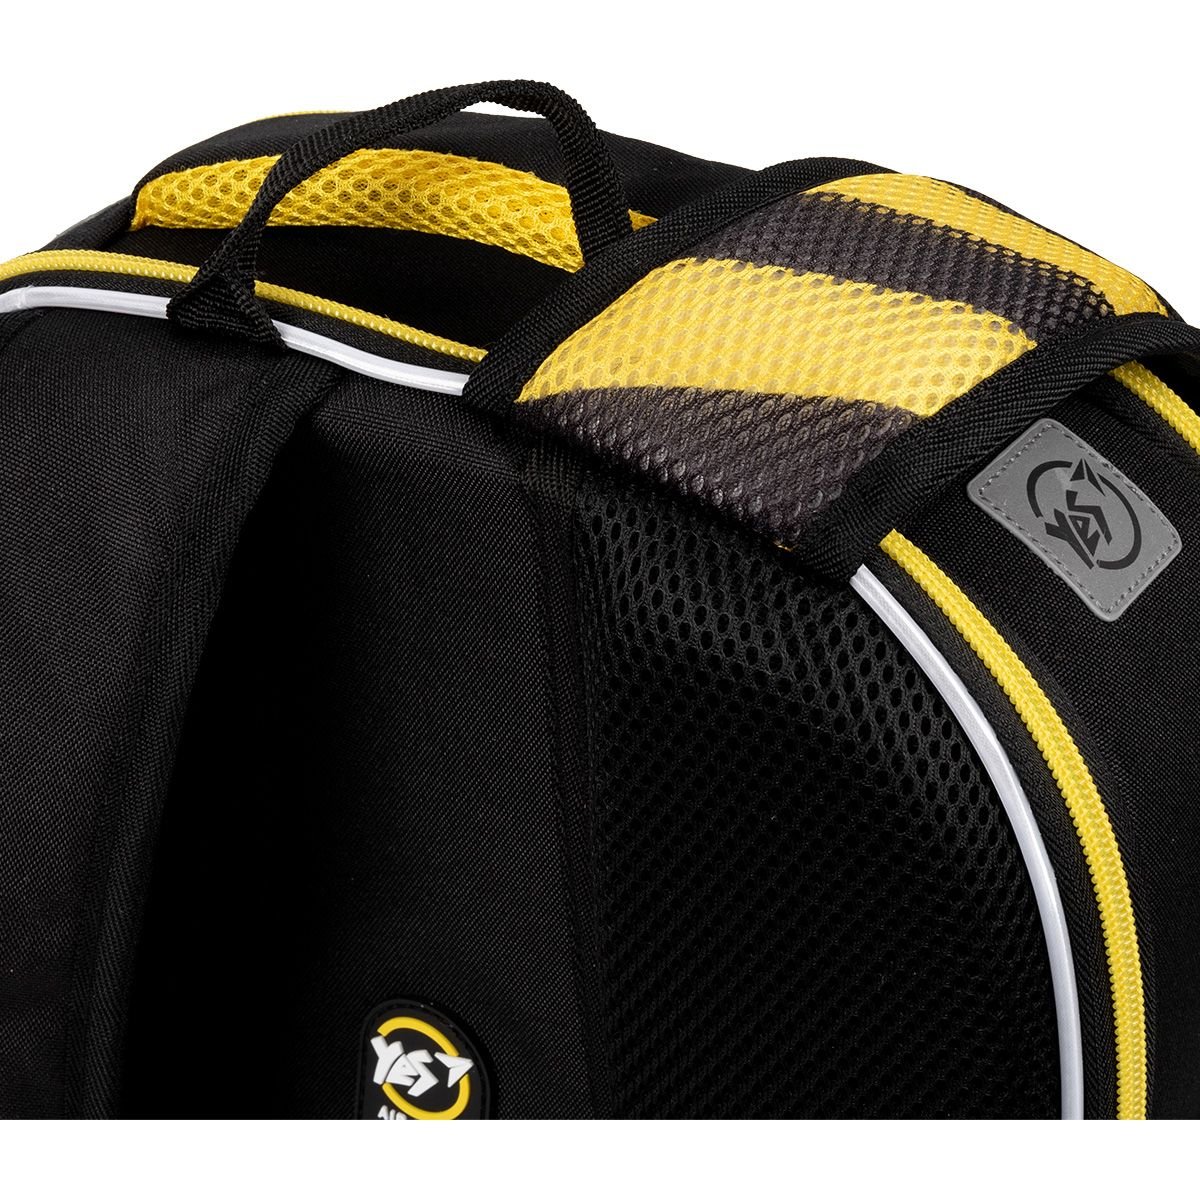 Рюкзак каркасний Yes S-78 Never Quit, чорний з жовтим (559417) - фото 7